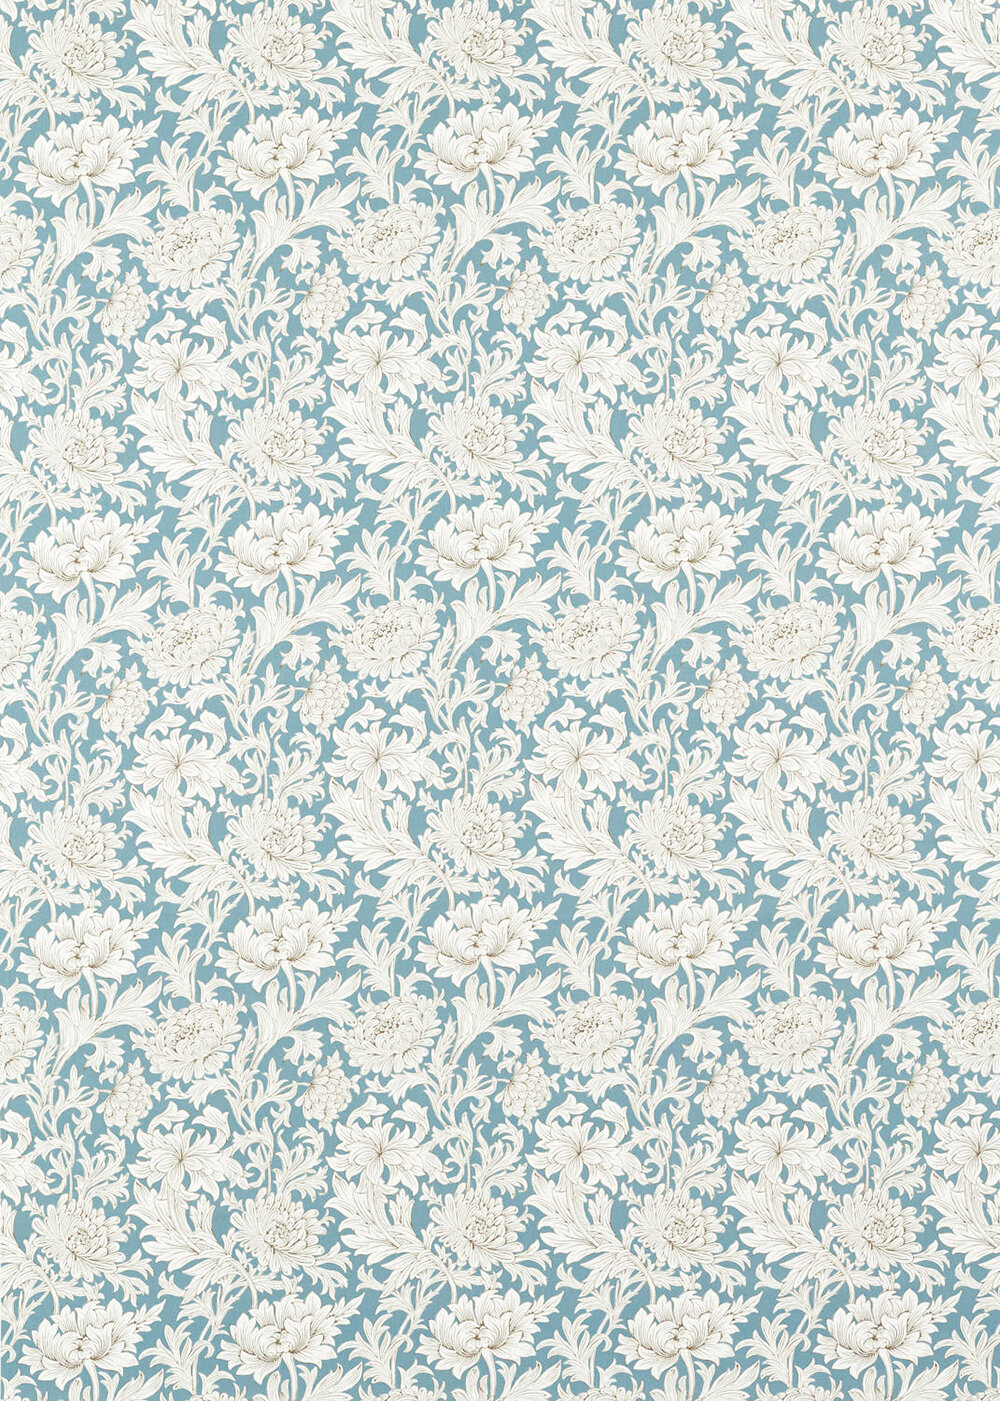 Chrysanthemum Toile Fabric - Slate - by Morris